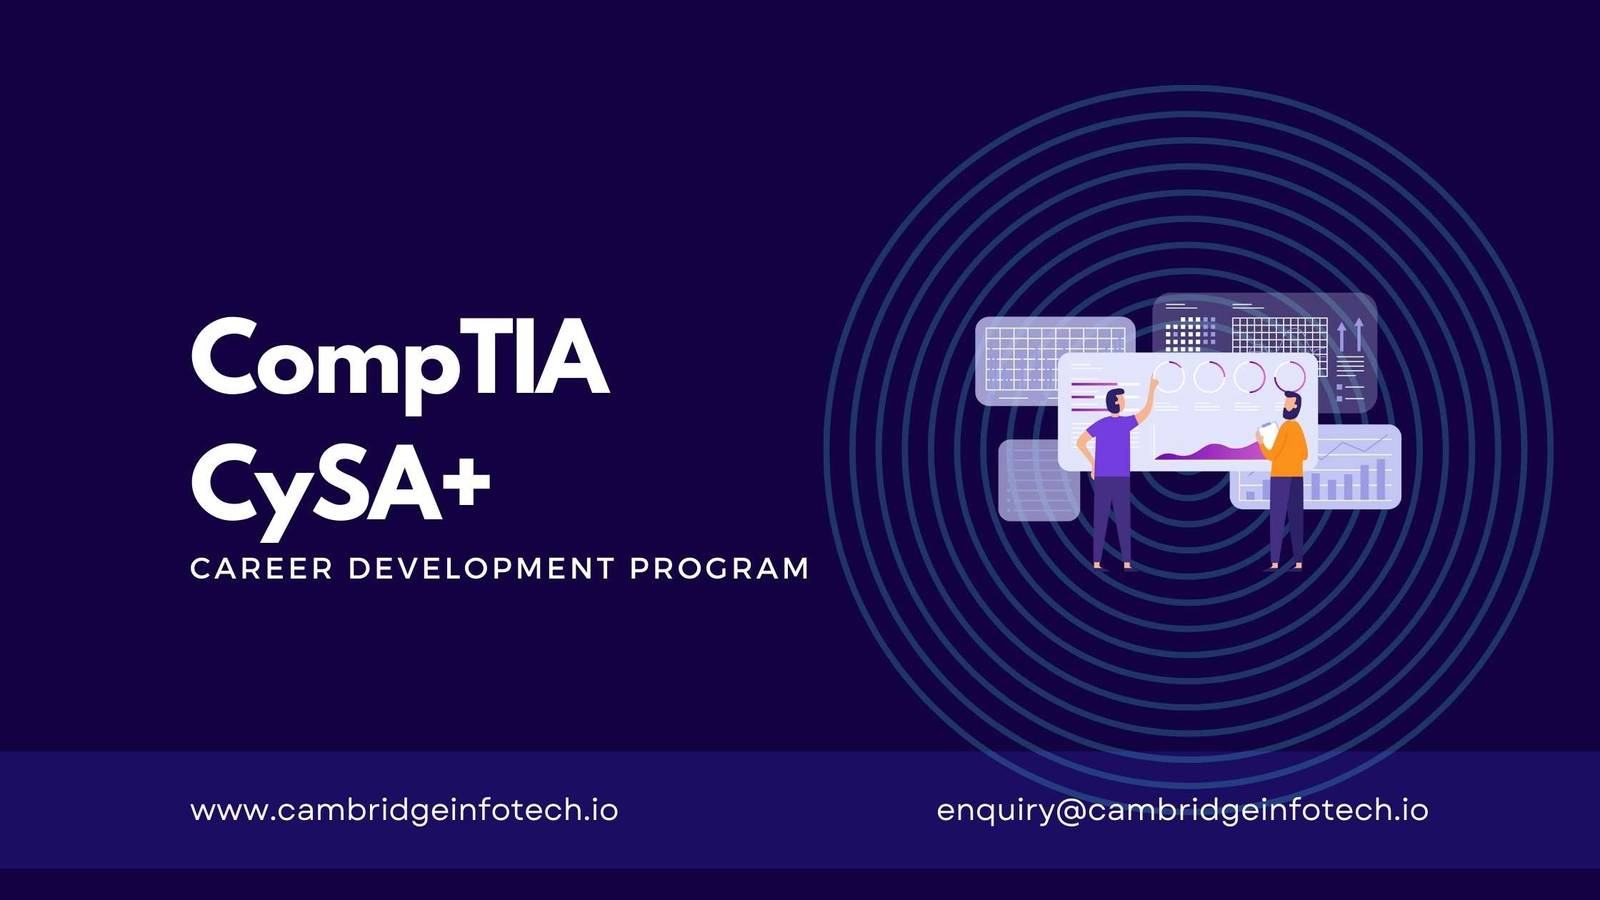 CompTIA CySA+ Career Development Program